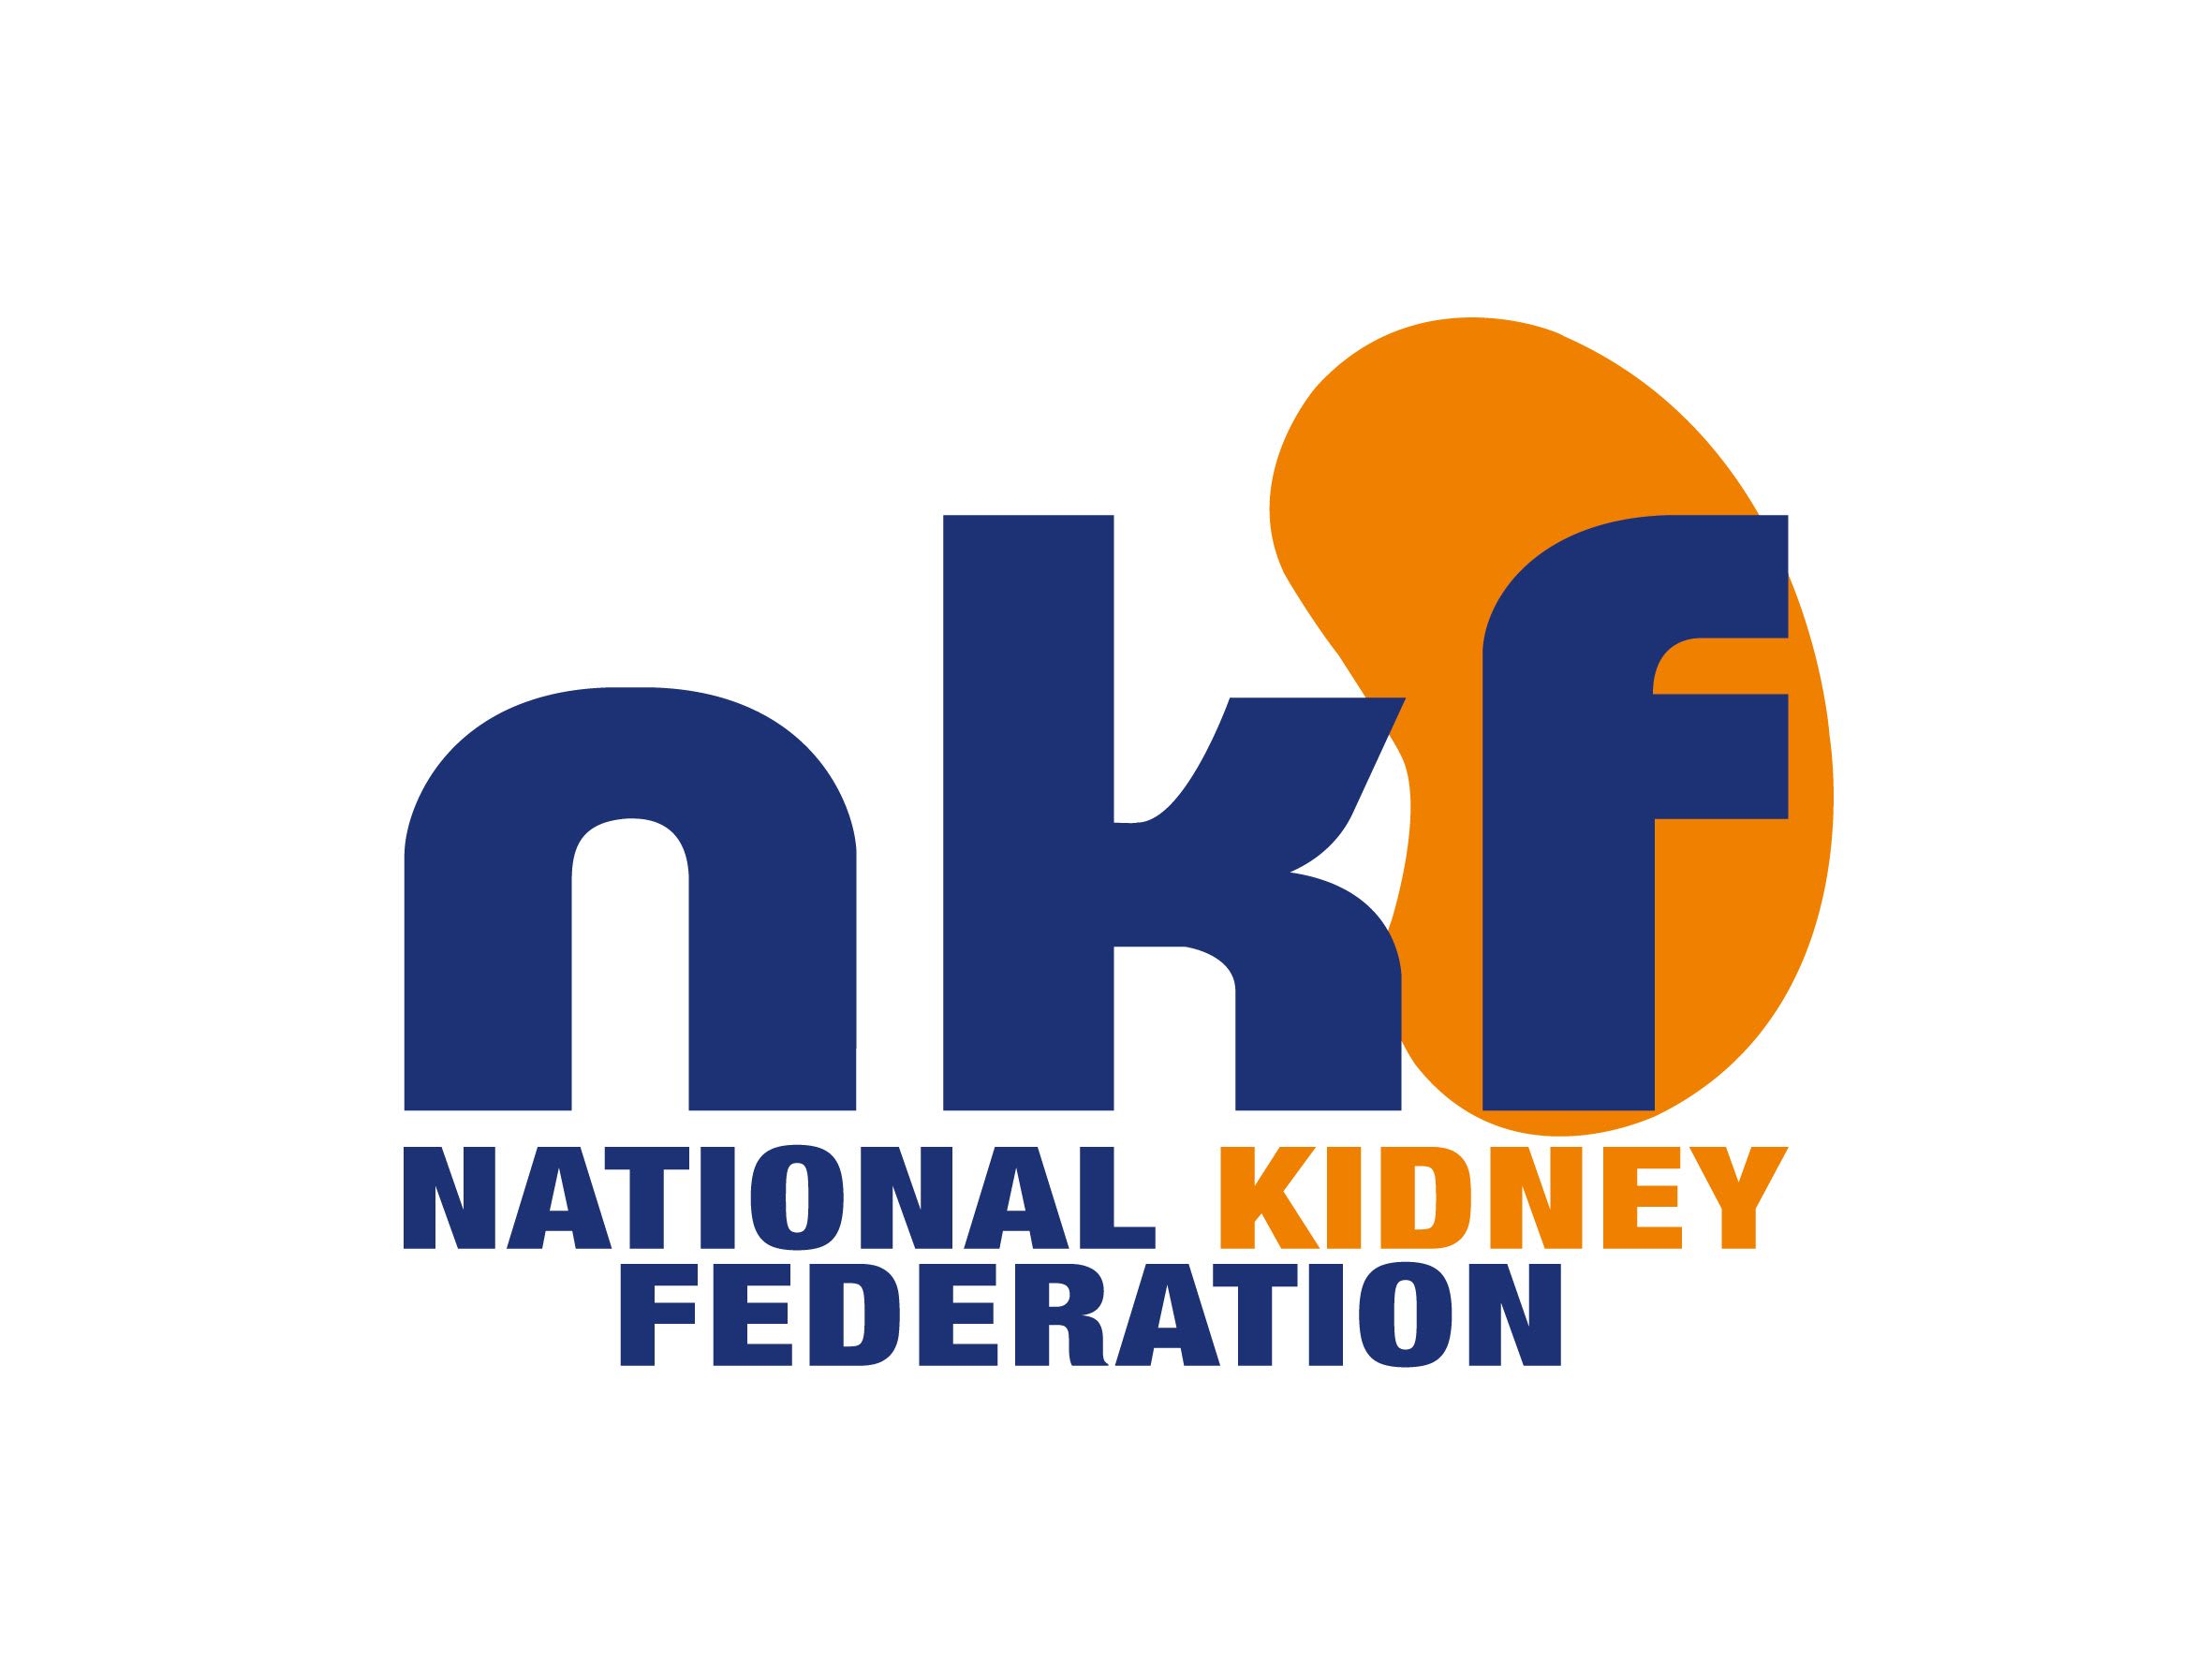 www.kidney.org.uk